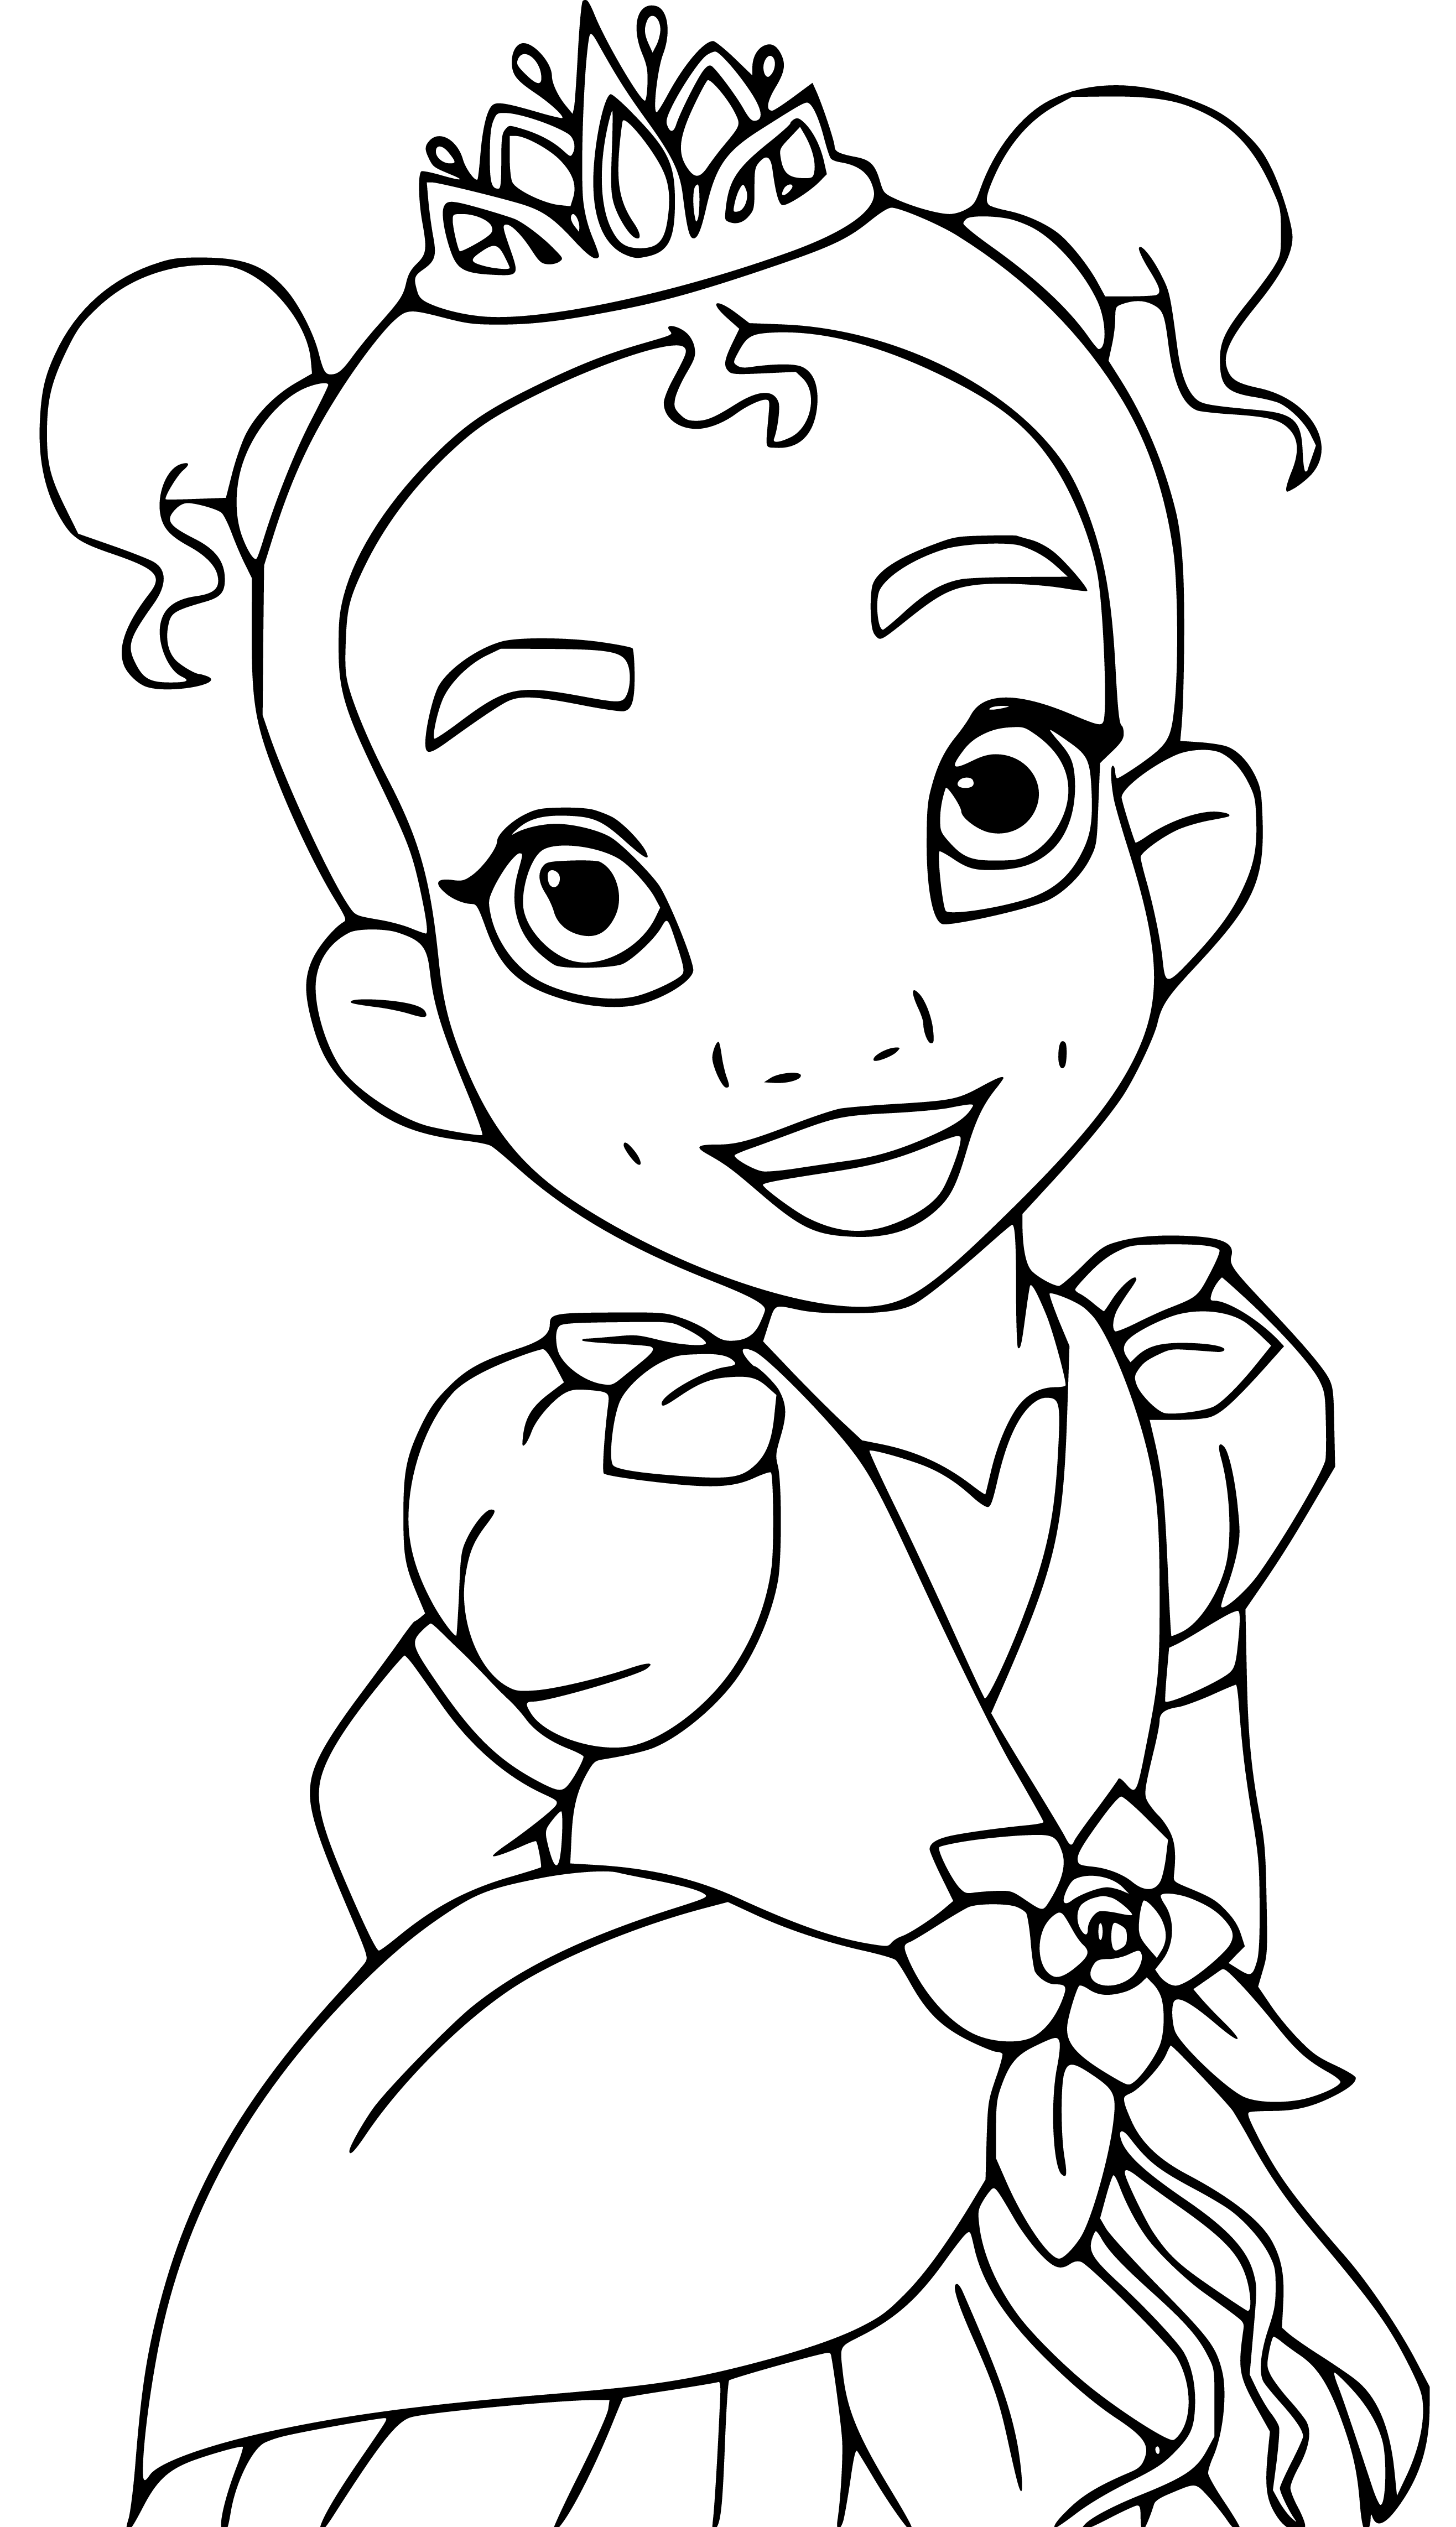 Princess Tiana as Child Coloring Pages - SheetalColor.com